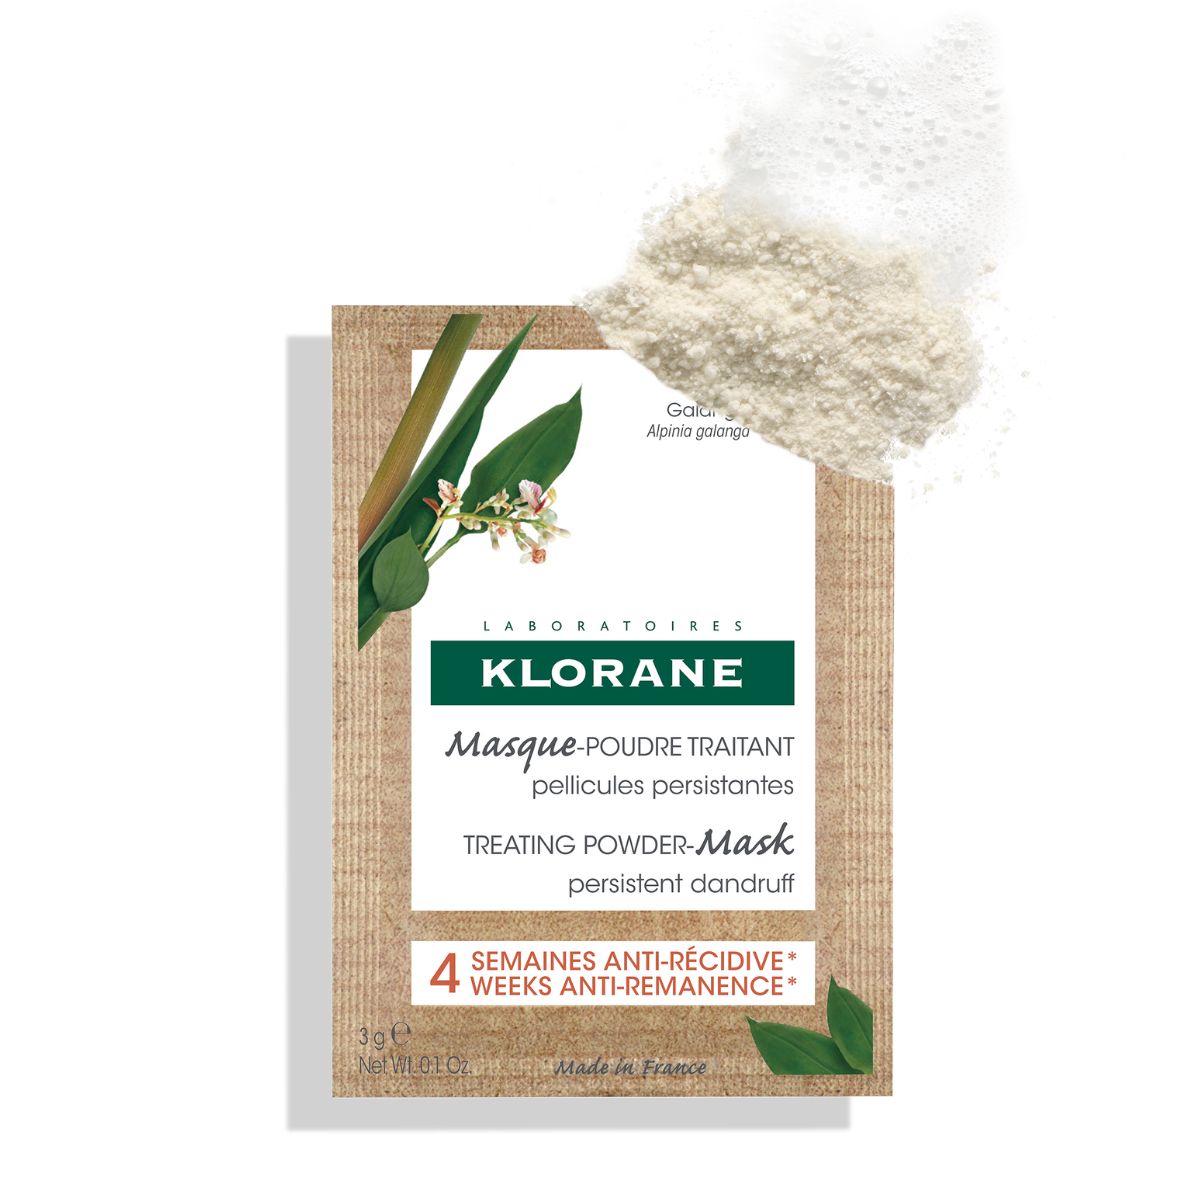 Klorane Galangal Anti-Dandruff Mask-Powder Treatment Treats Persistent Dandruff